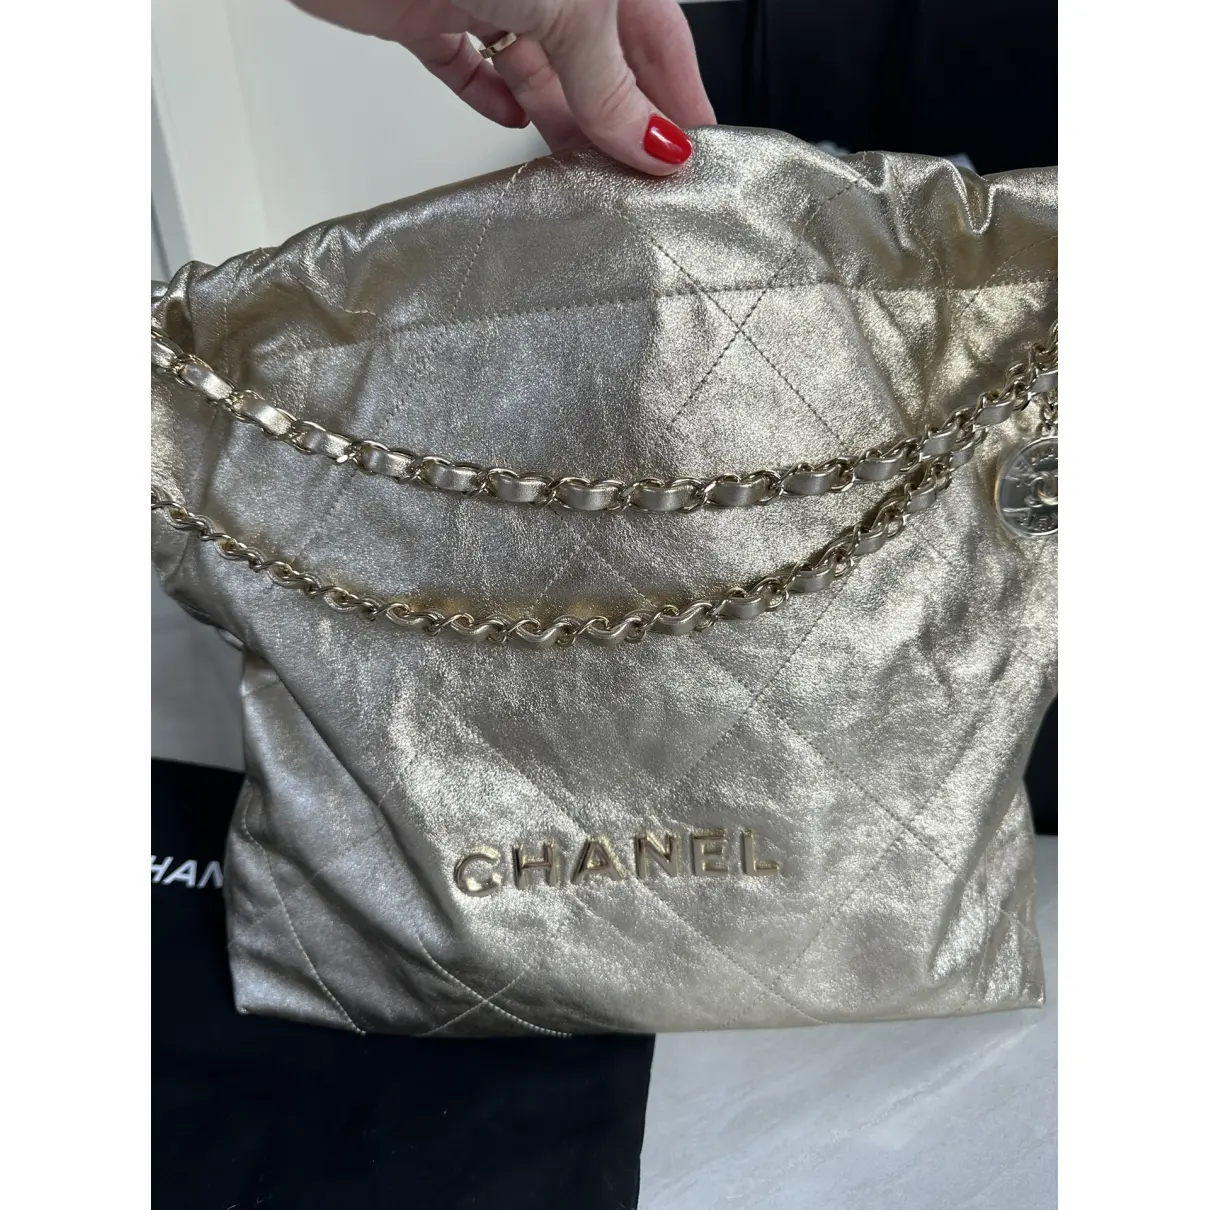 Buy Chanel Chanel 22 leather satchel online